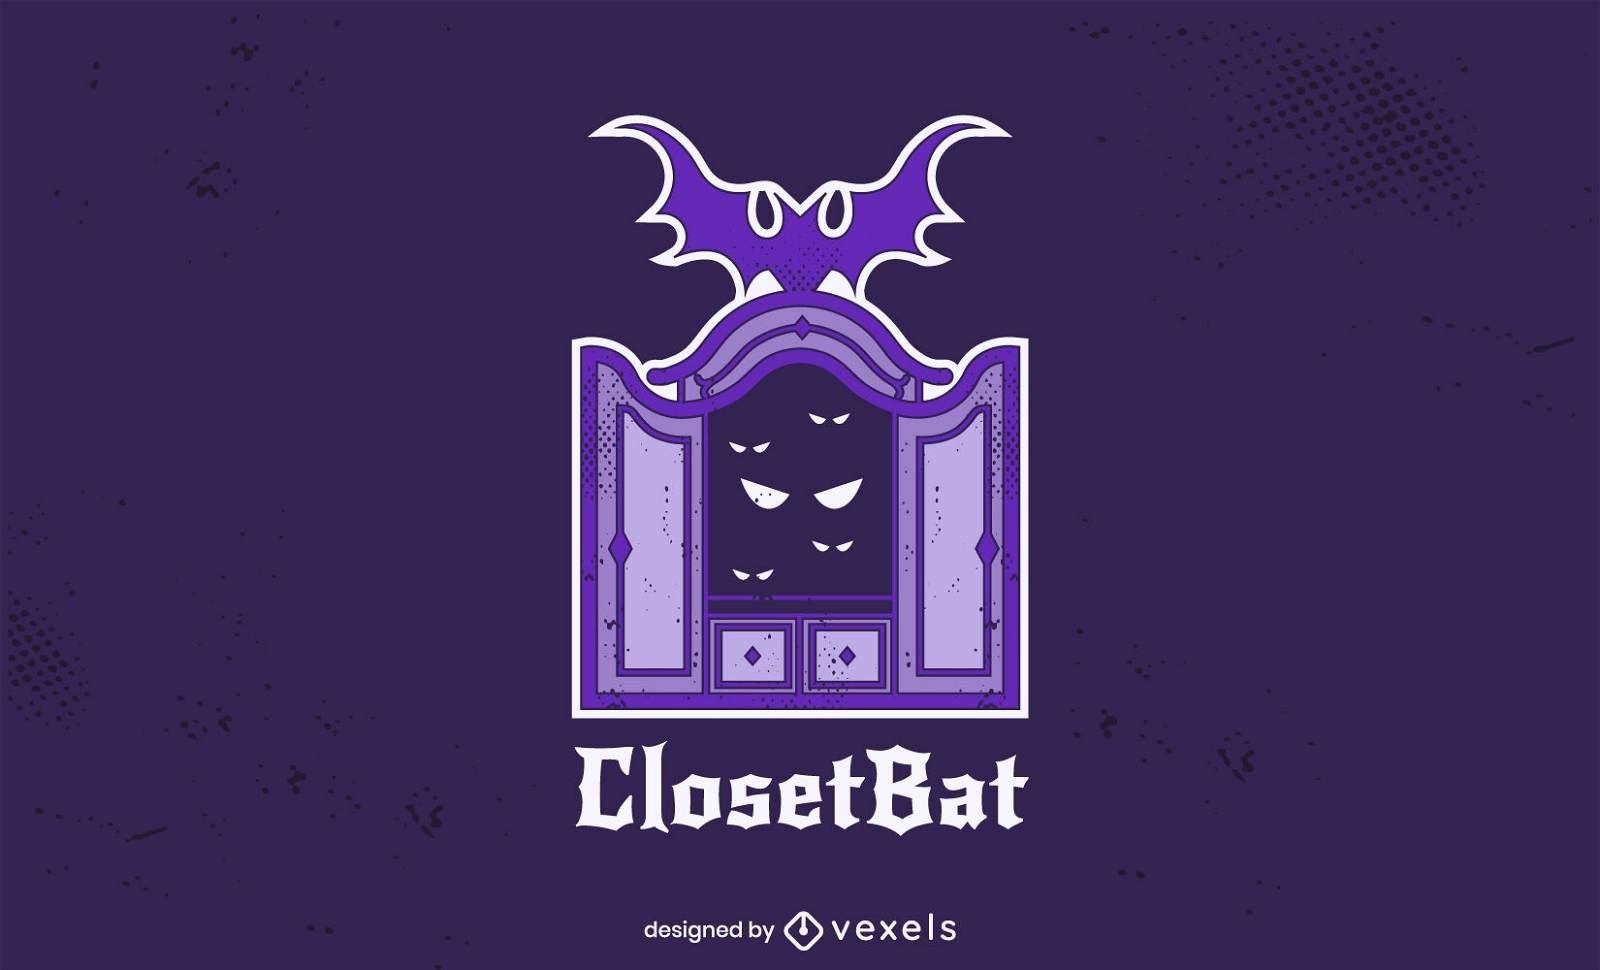 Victorian gothic closet bat logo template